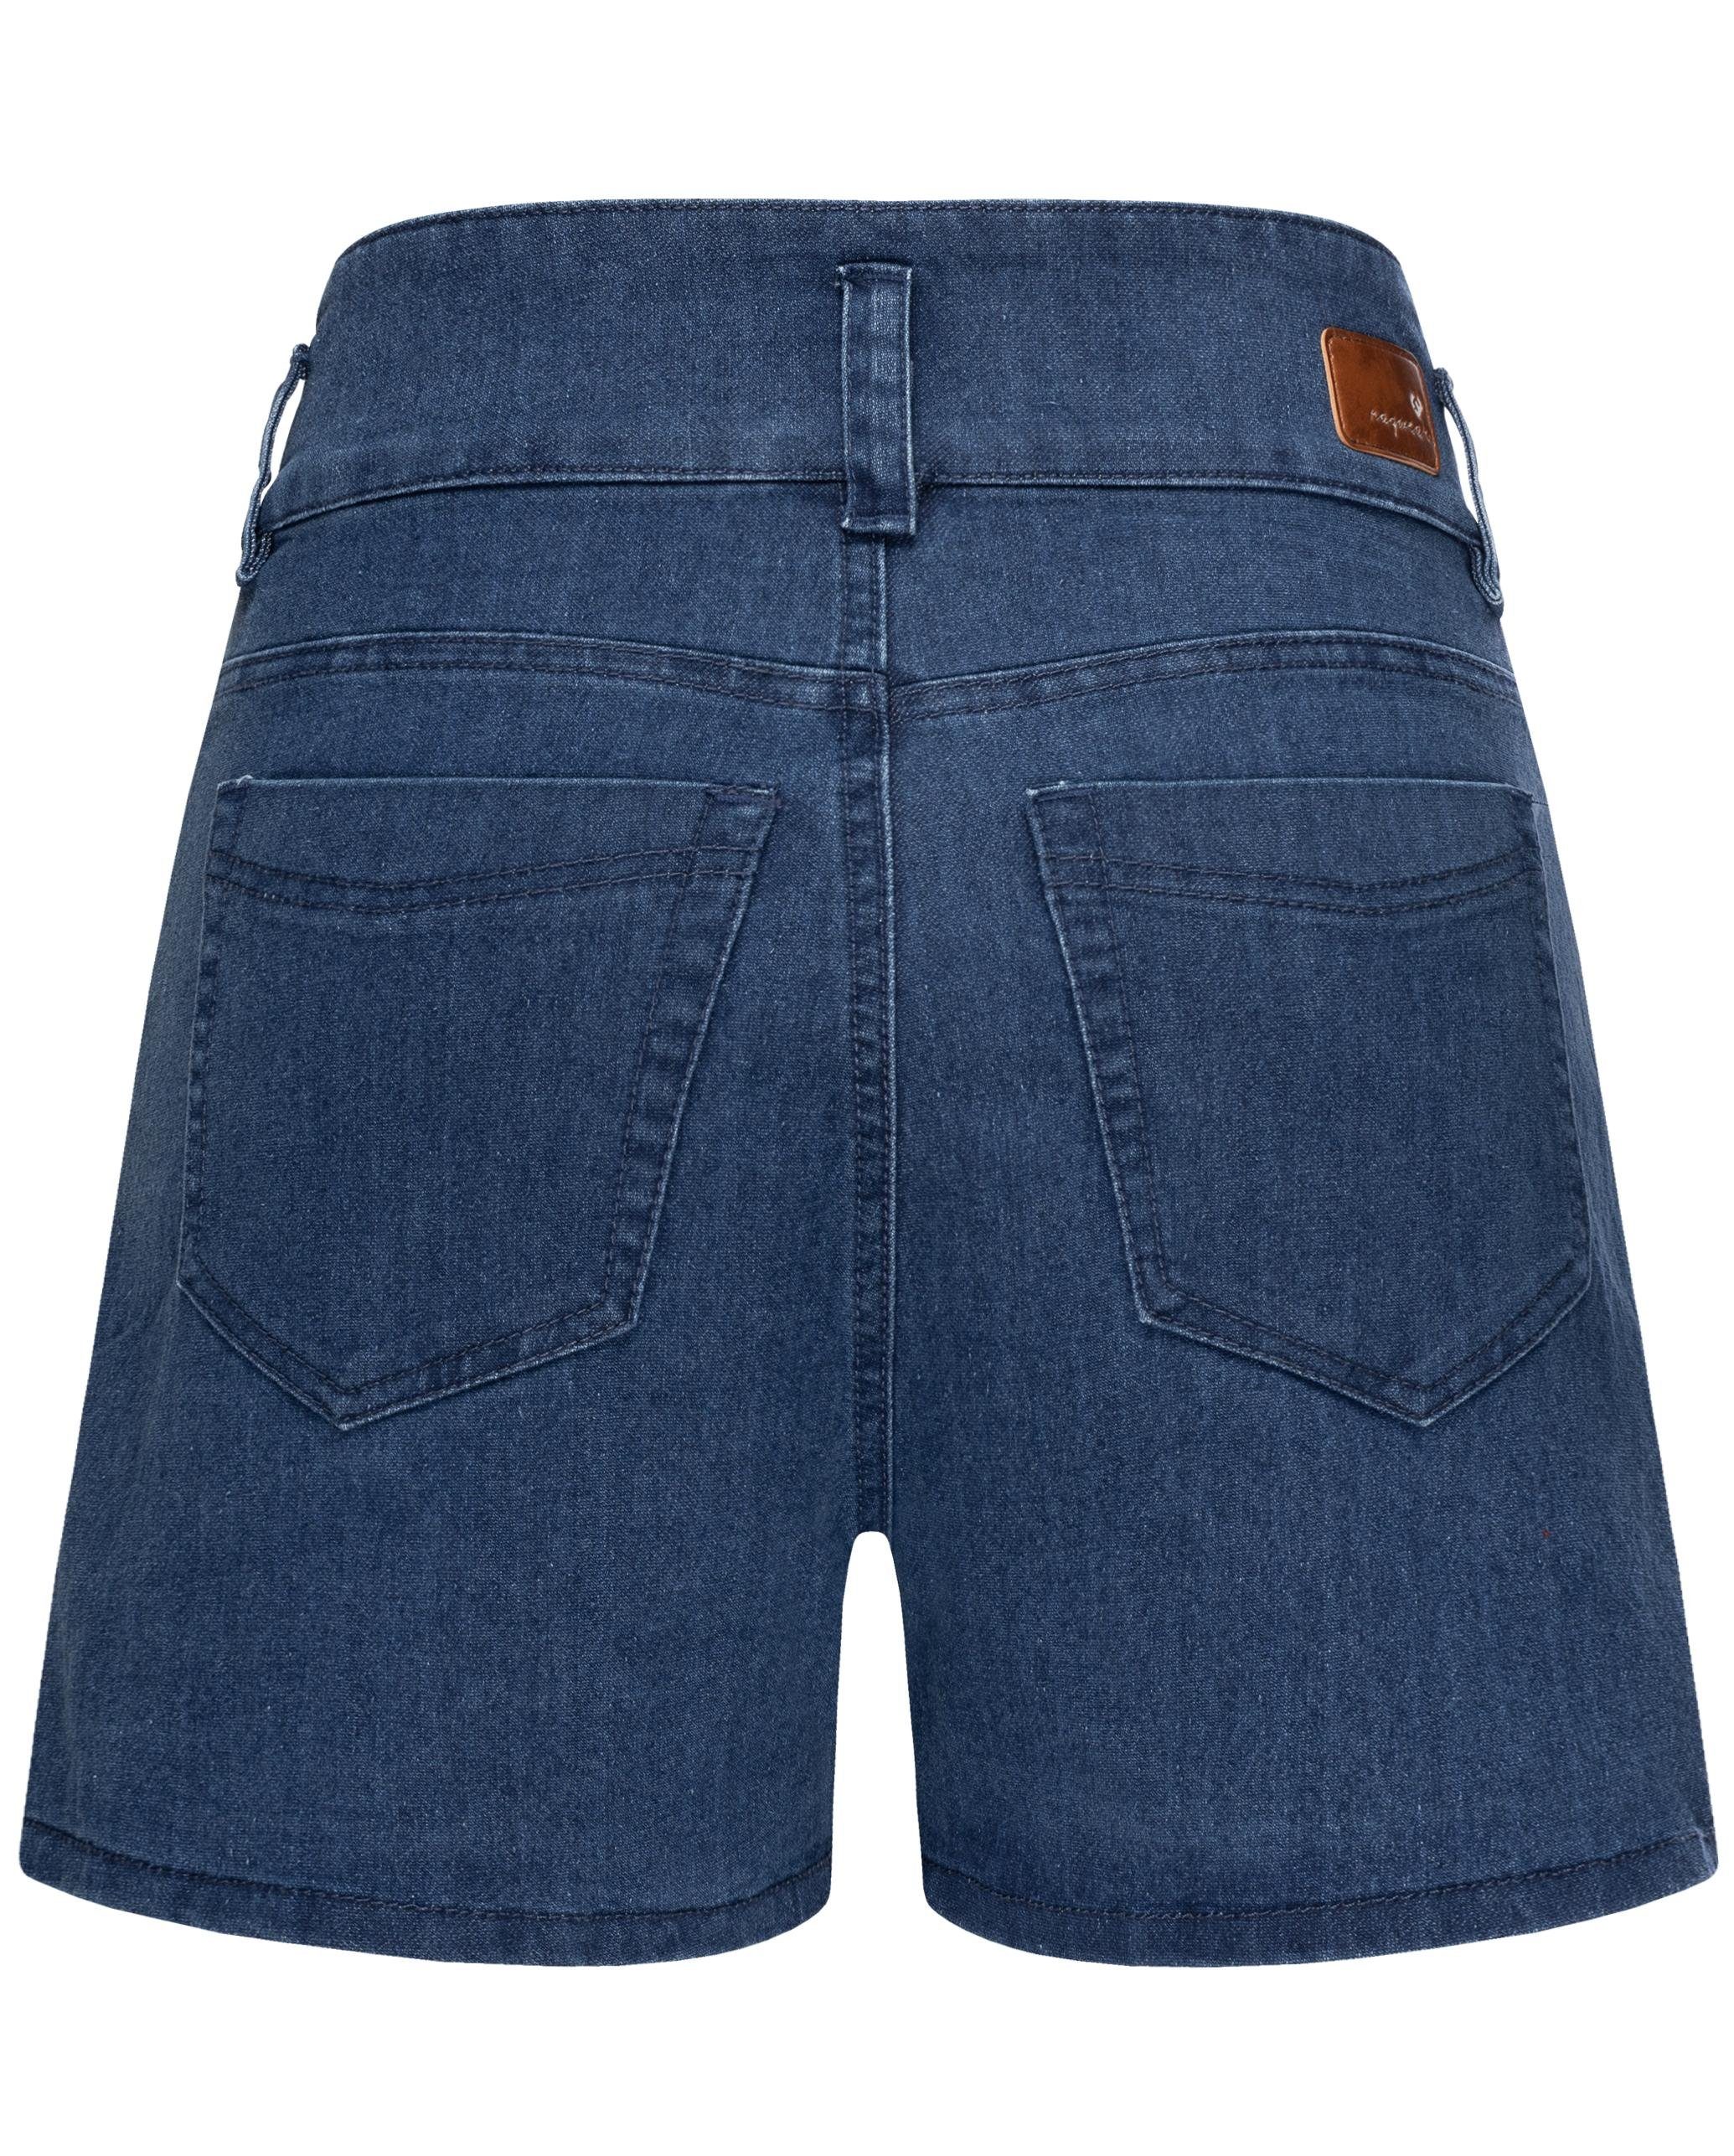 Sommerhose indigo kurze stylische, Suzzie in Jeansoptik Shorts Ragwear